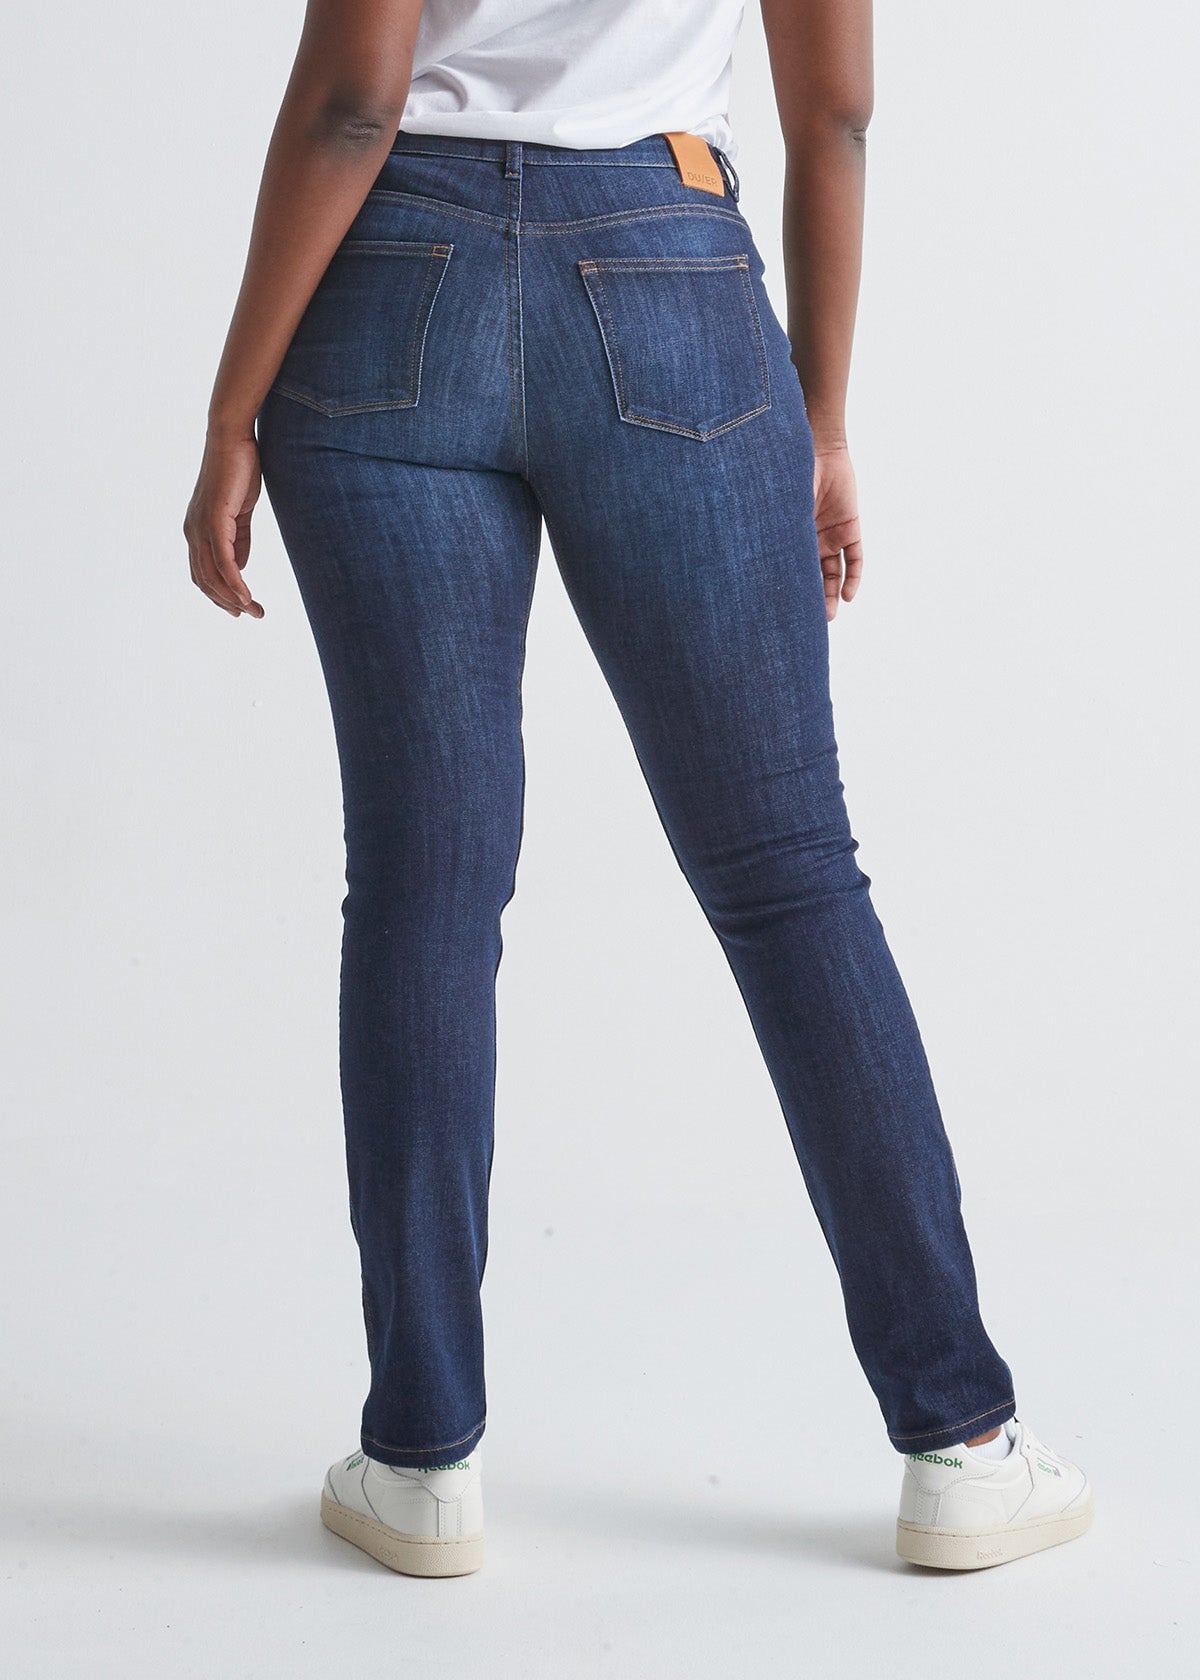 Women's Slim Straight dark blue stretch jeans back